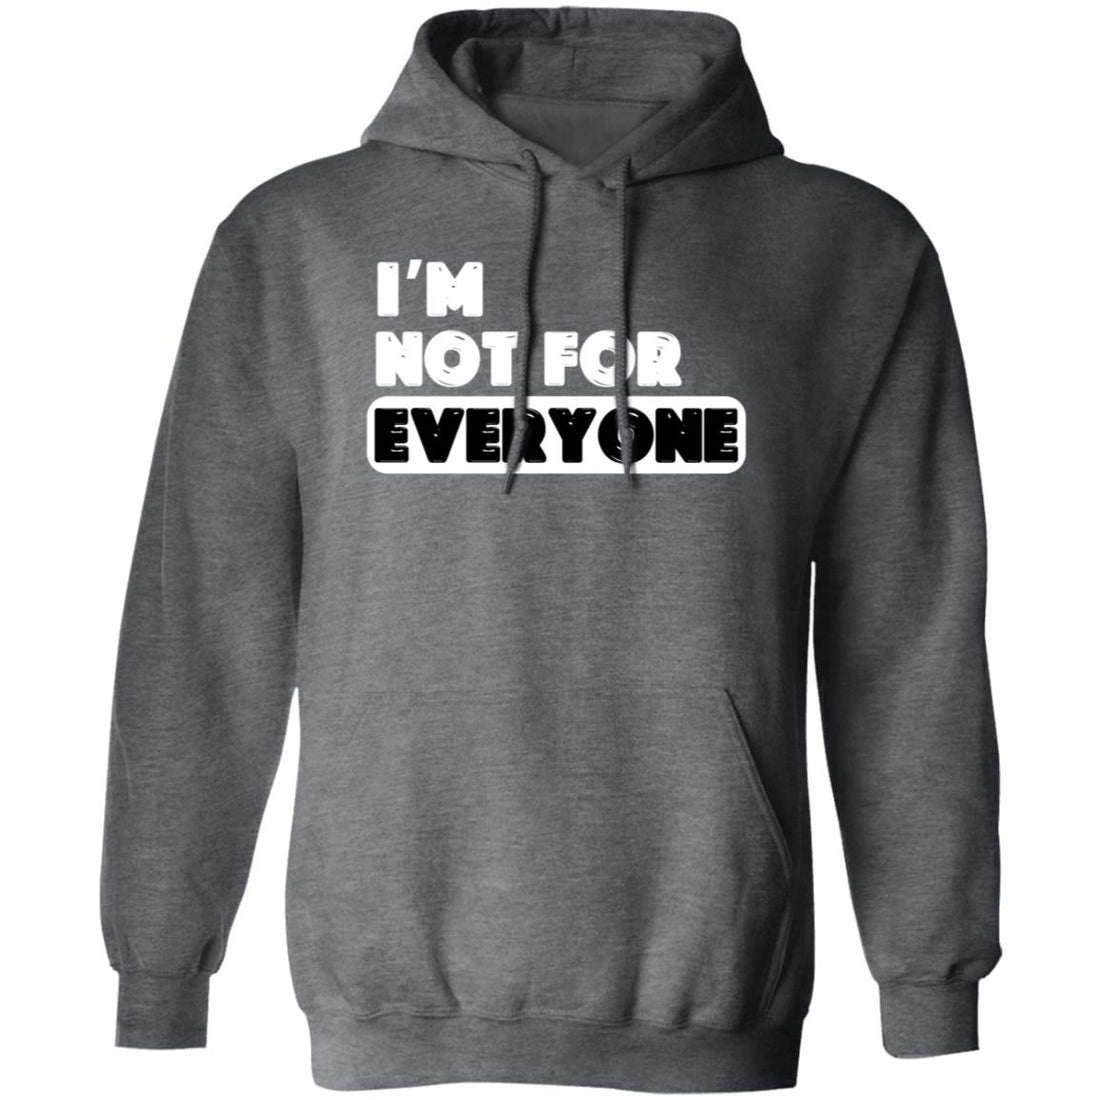 I'm Not For Everyone Hoodie - Sweatshirts - Positively Sassy - I'm Not For Everyone Hoodie